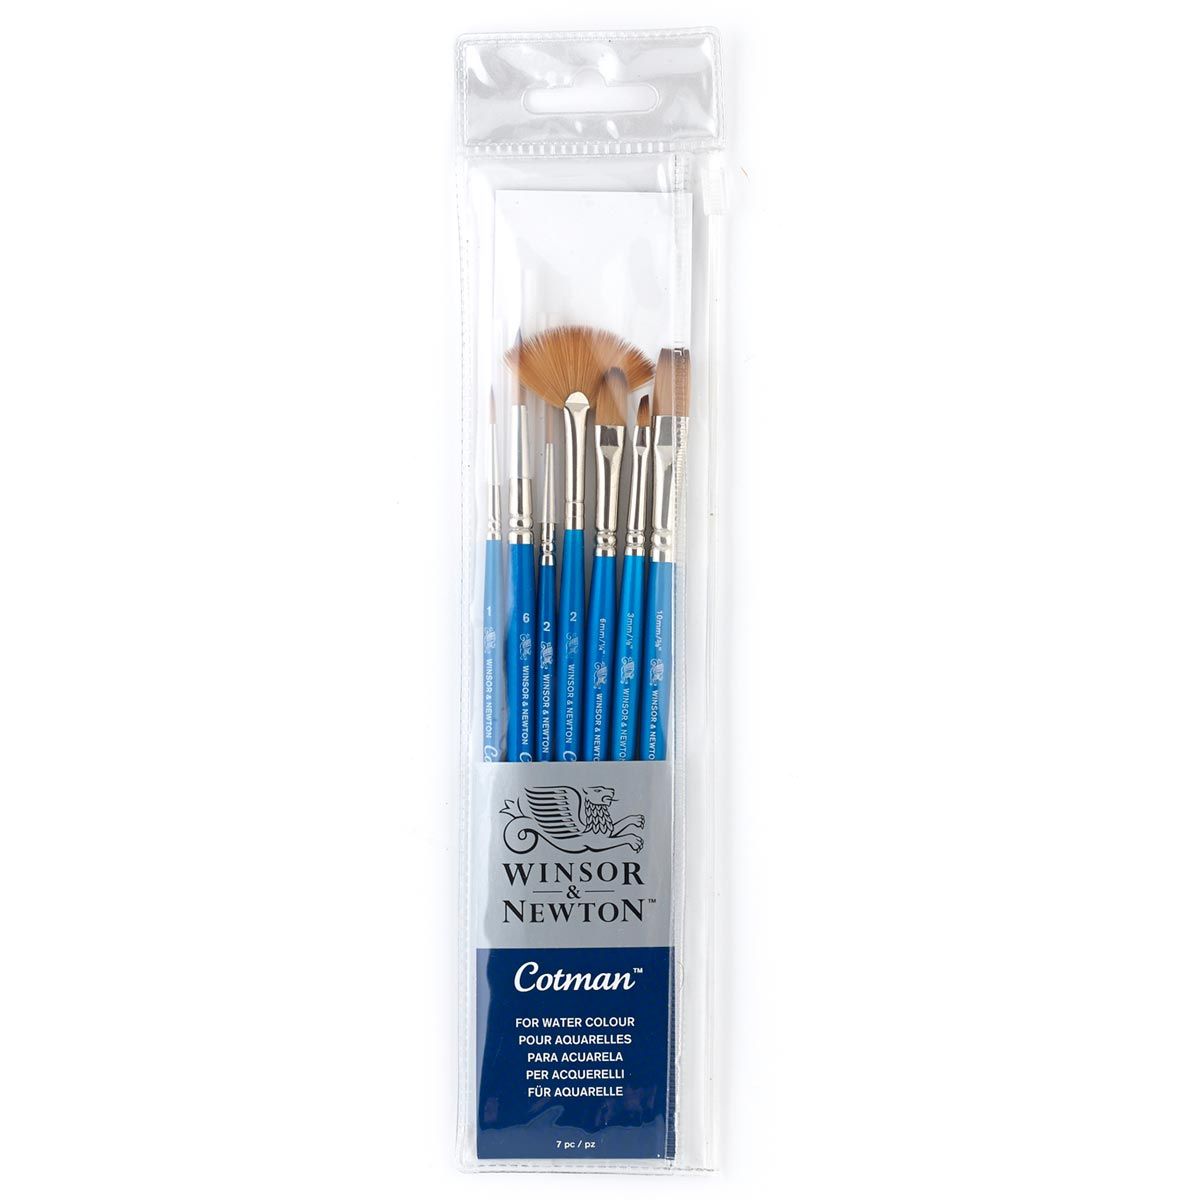 Winsor & Newton Cotman Watercolour Brush - 7pc Set